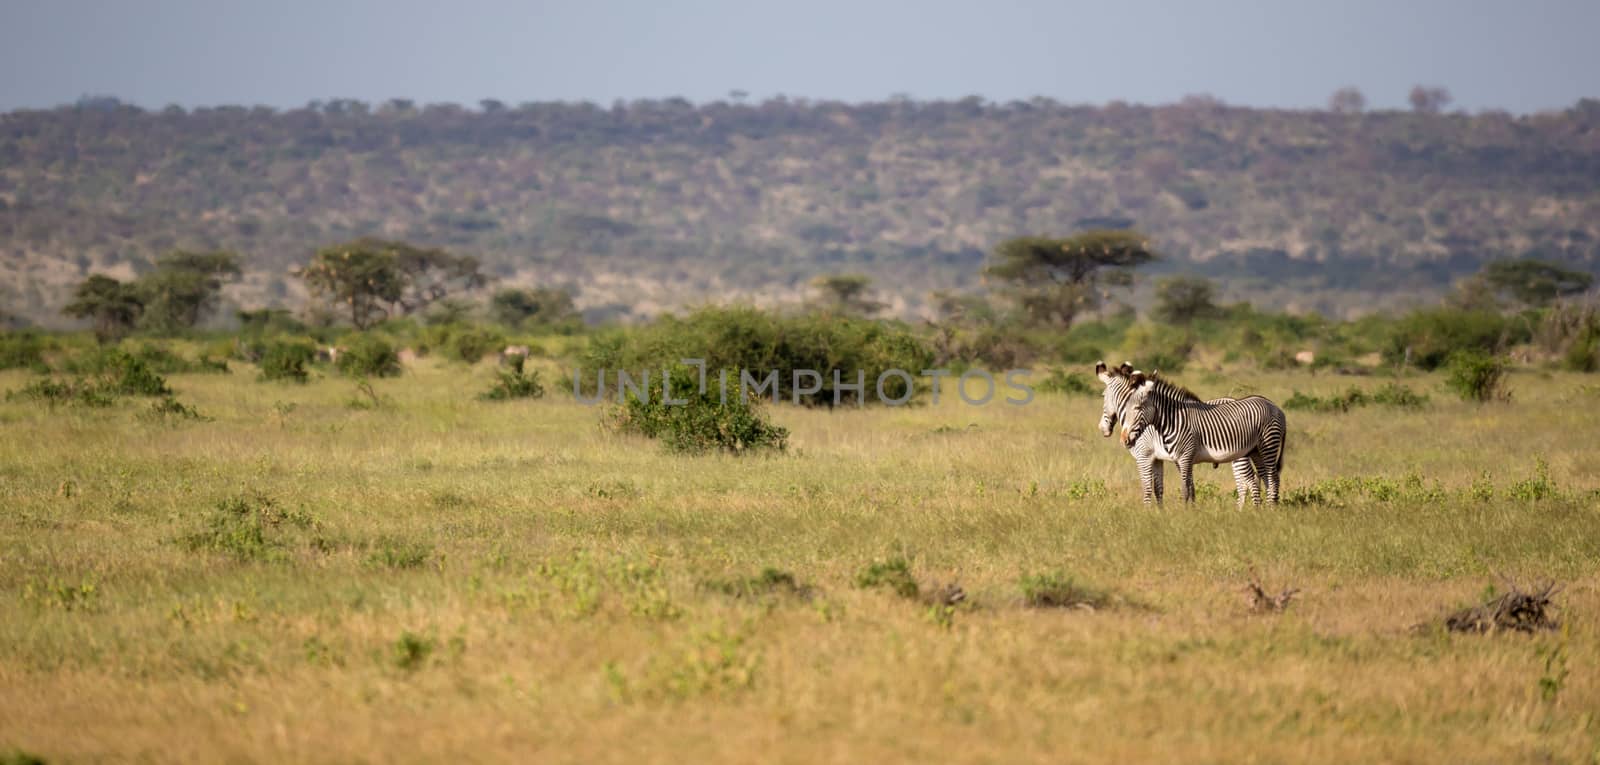 Some native antelopes in the grassland of the Kenyan savannah